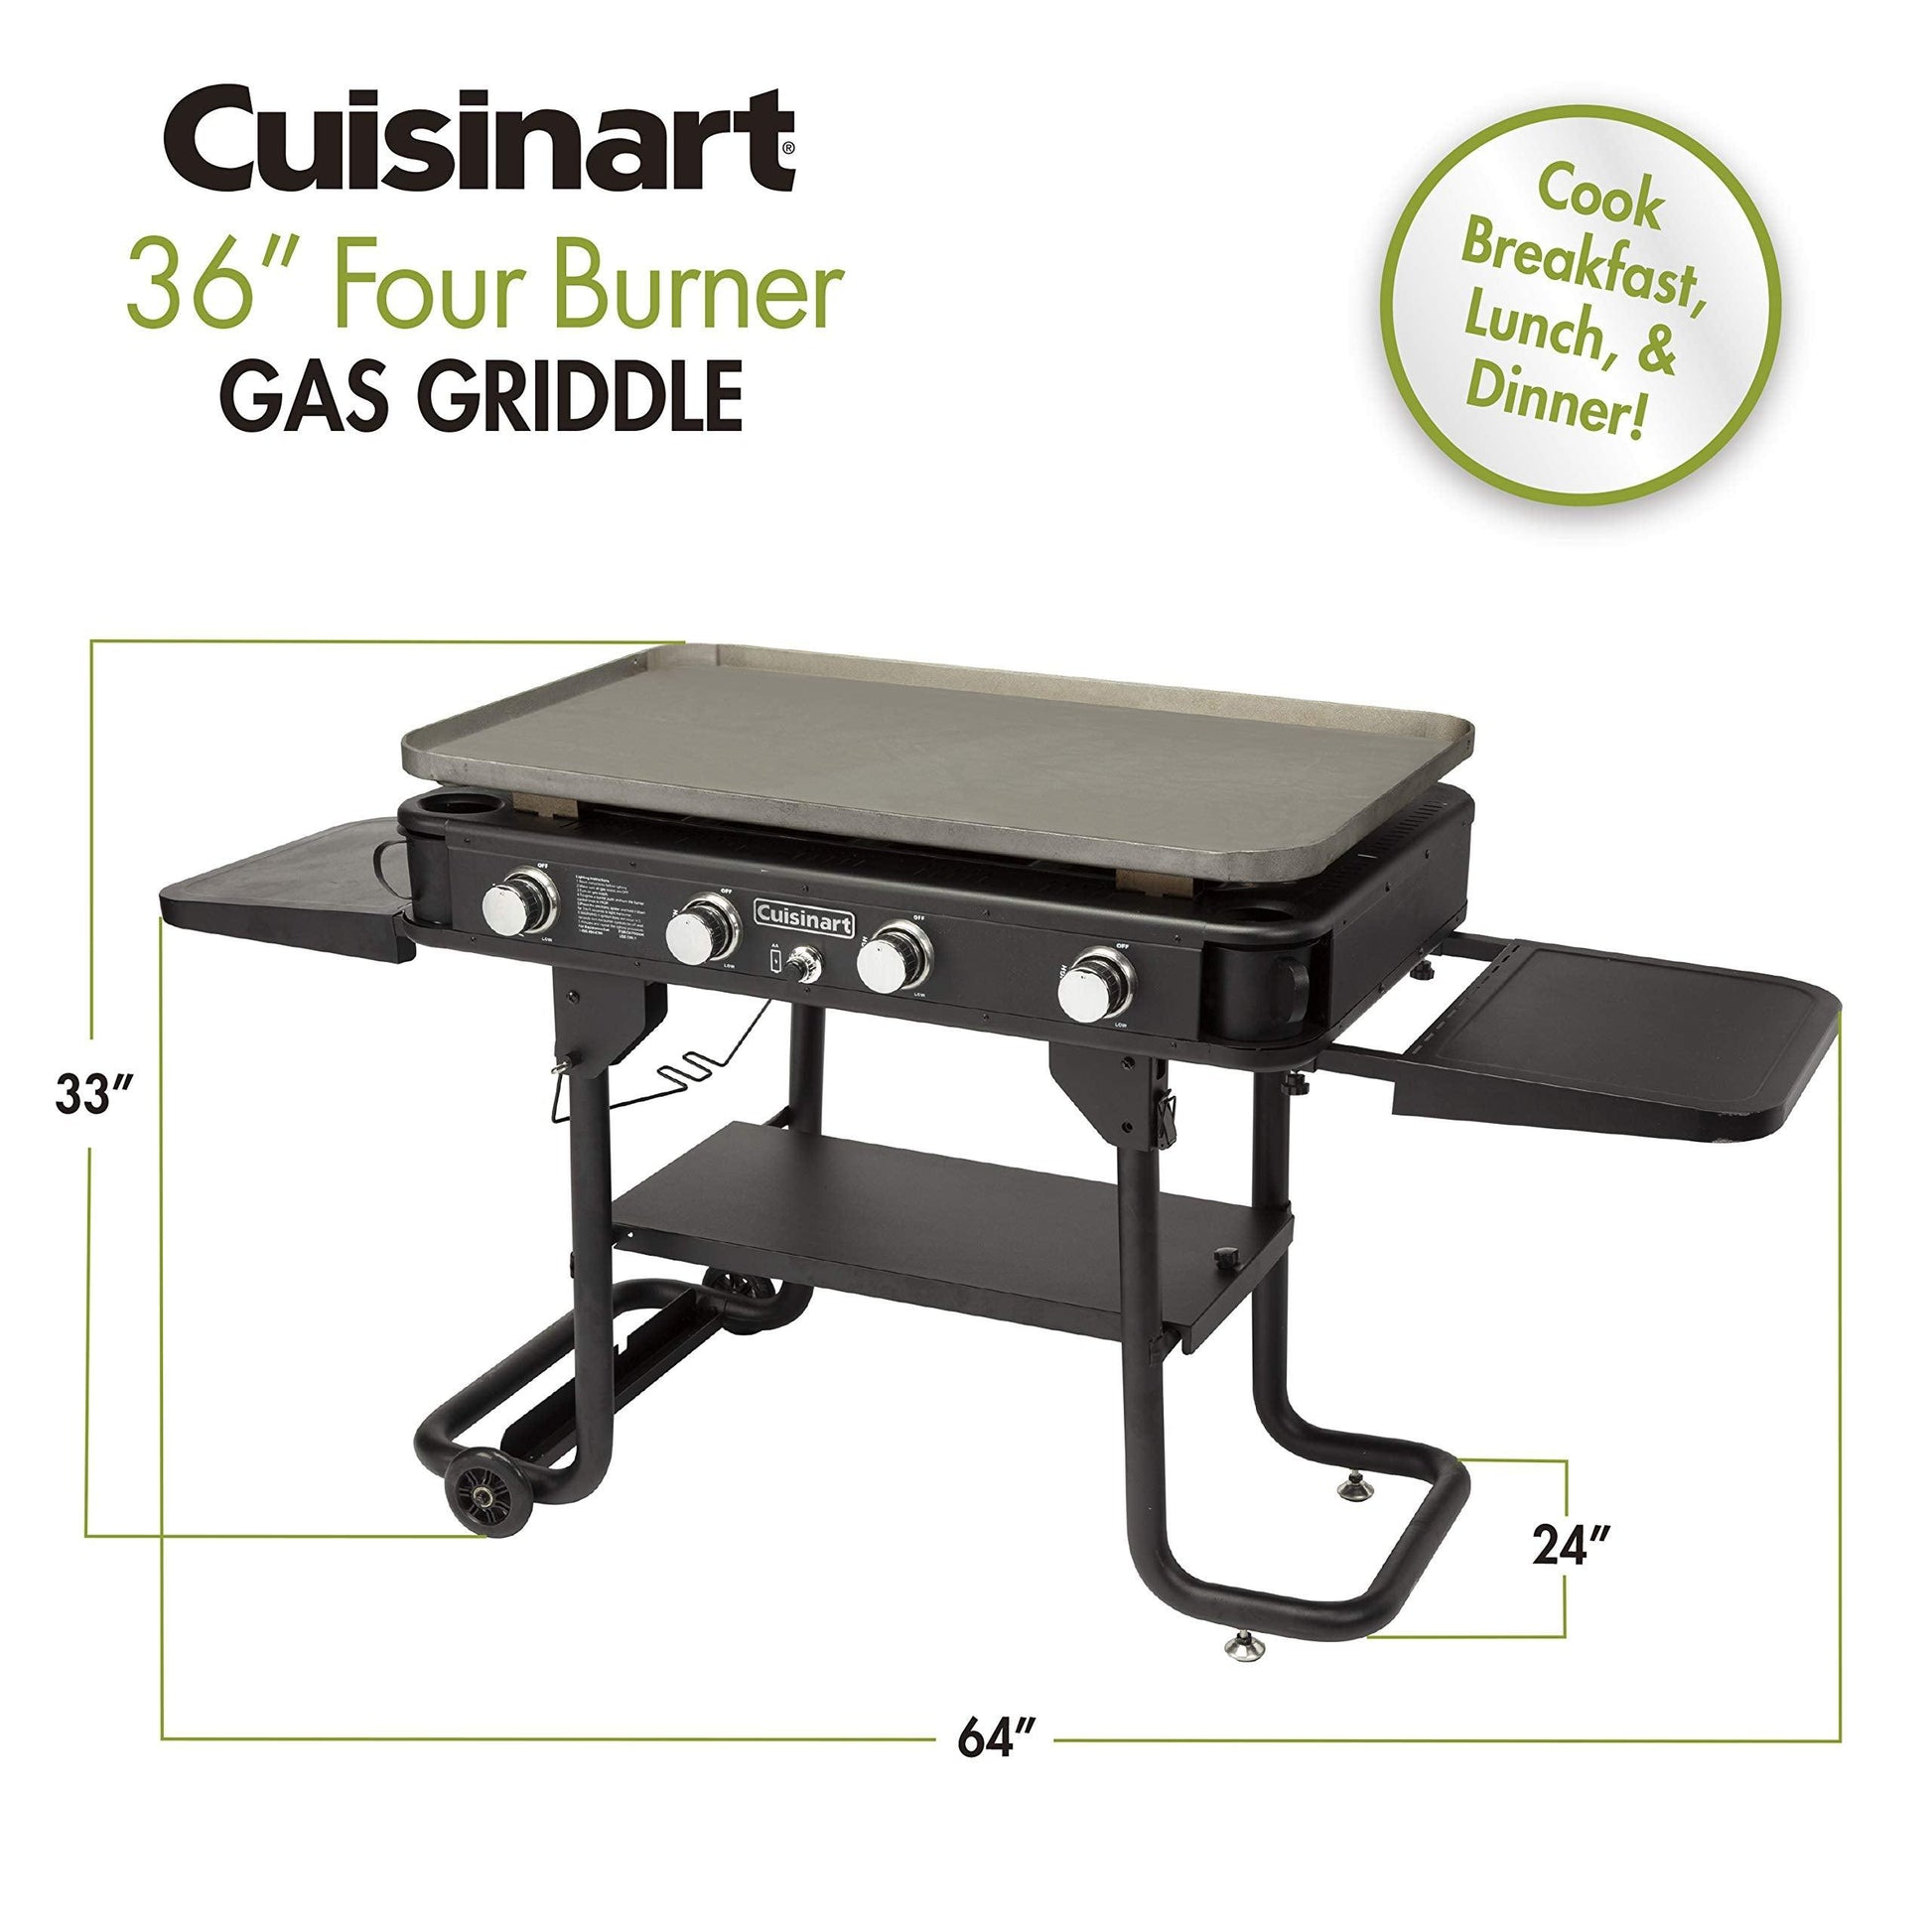 Cuisinart CGG-0036, 36" Four Burner Gas Griddle - CookCave